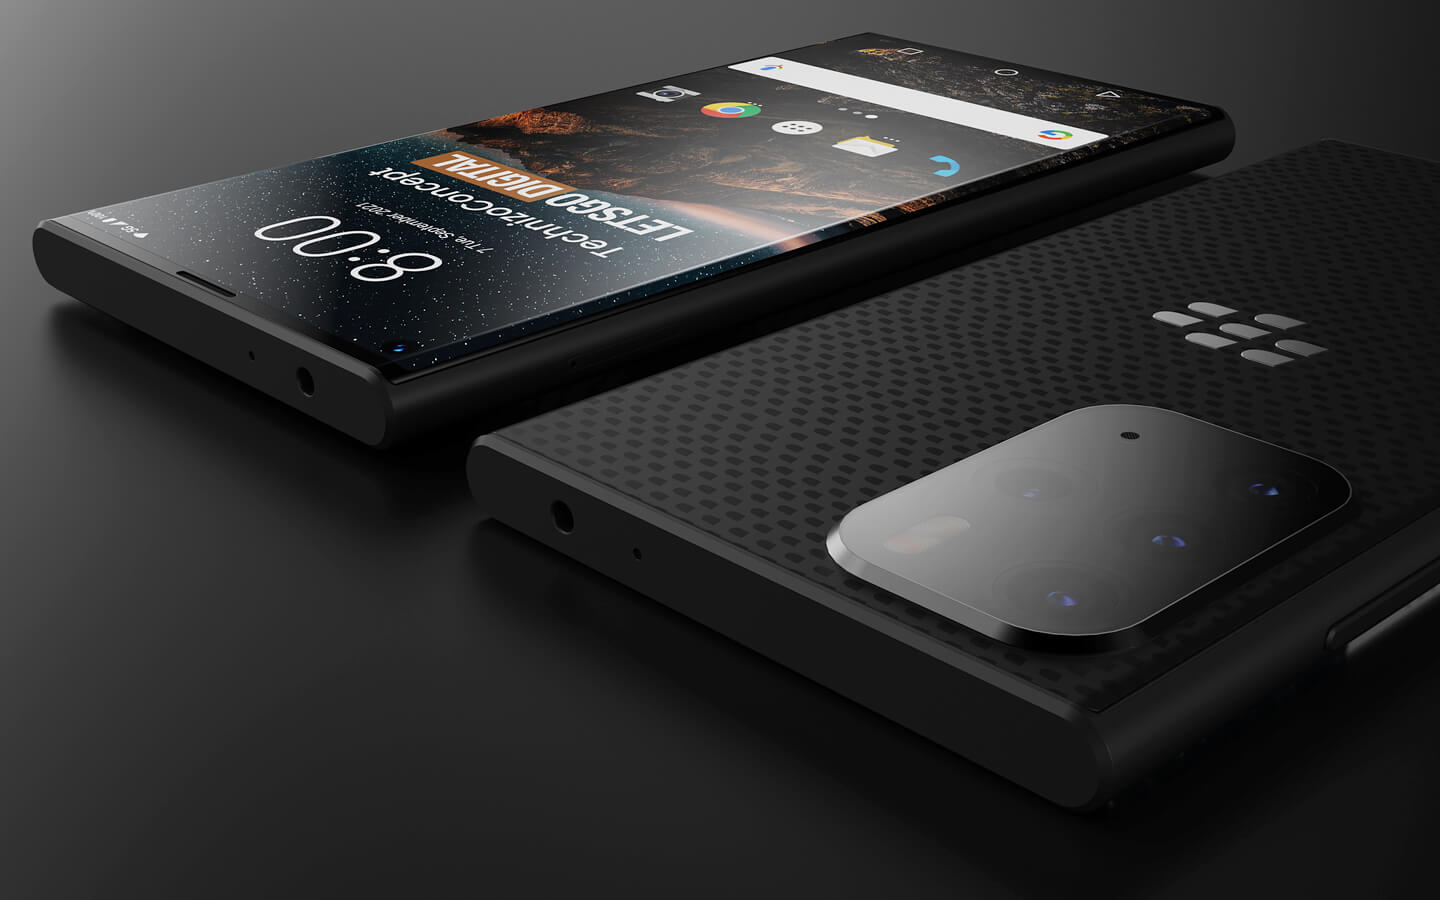 Blackberry Evolve smartphone